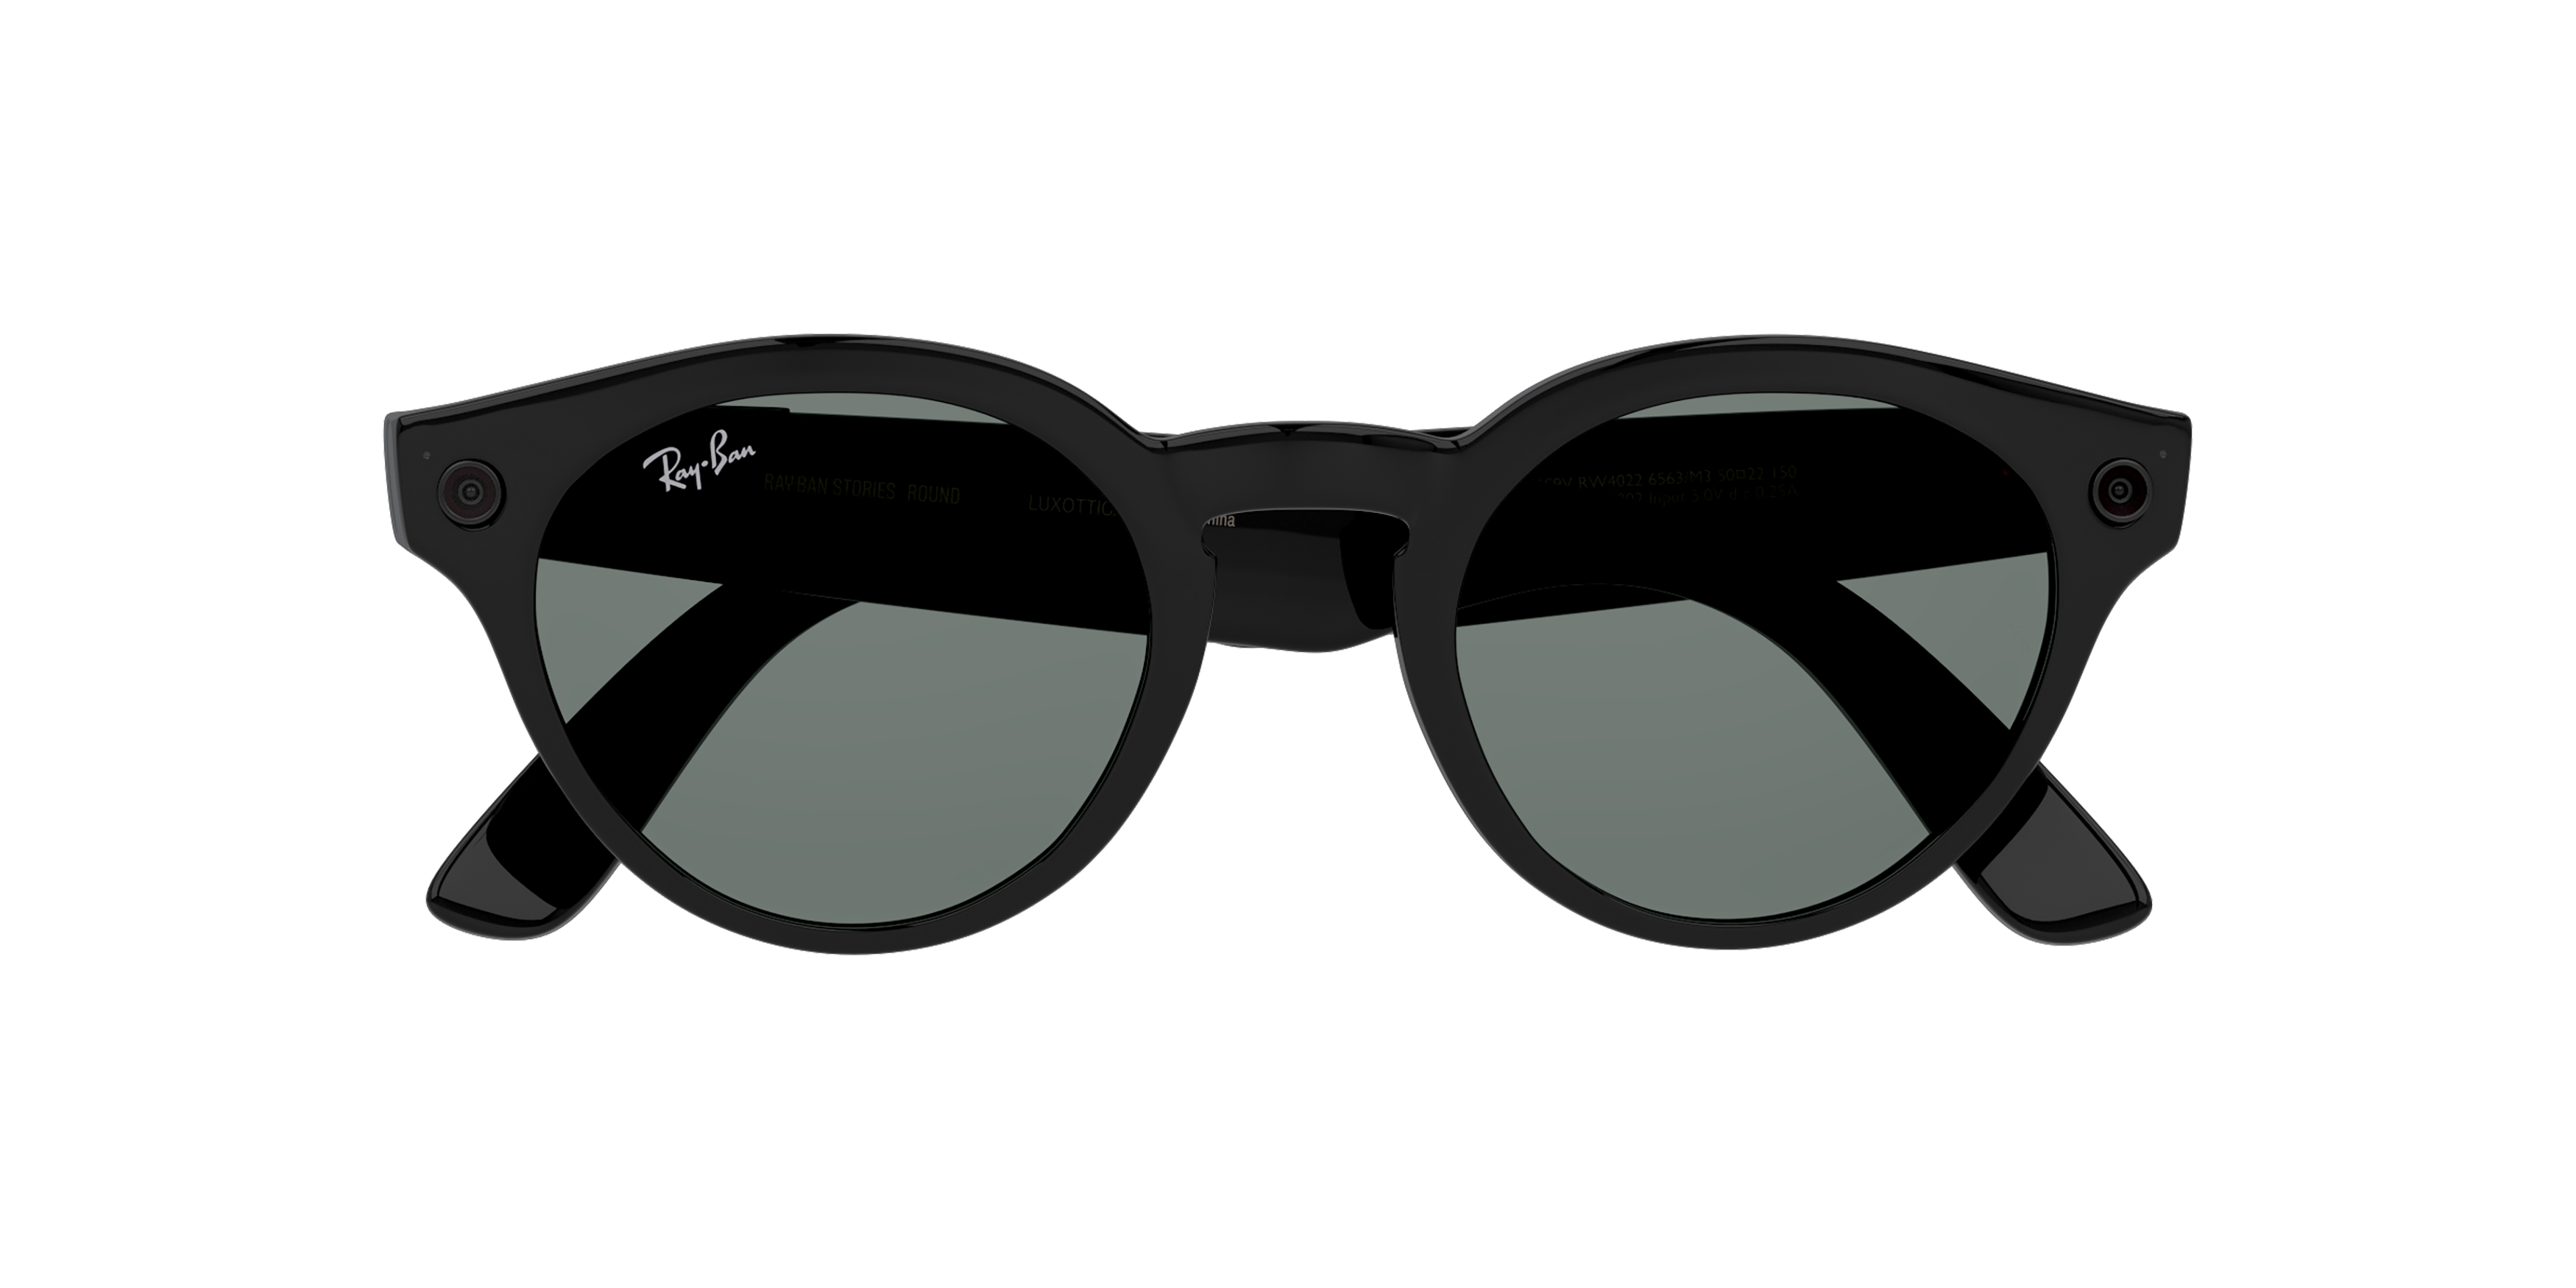 Folded Ray-Ban Stories Round RW 4003 (601/71) Sunglasses Green / Black